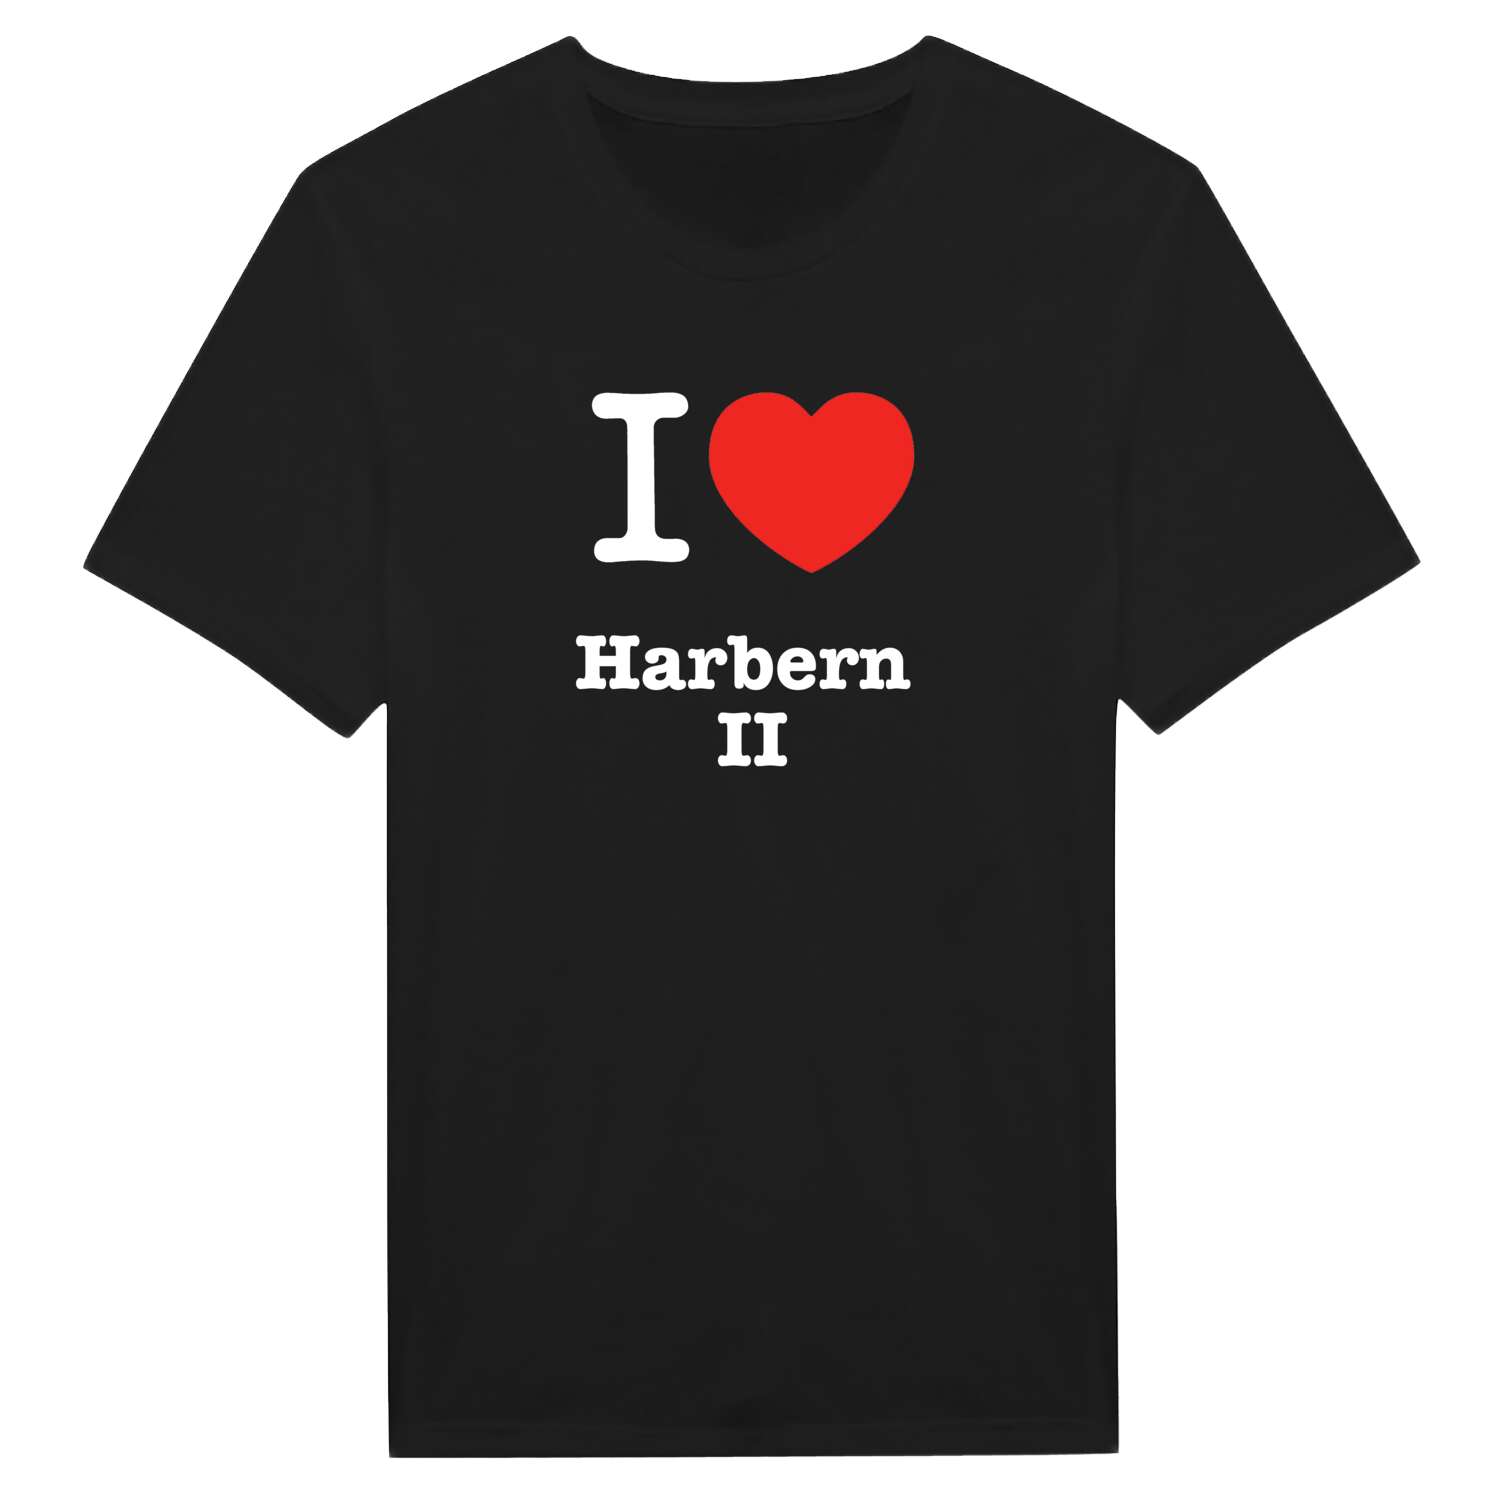 Harbern II T-Shirt »I love«